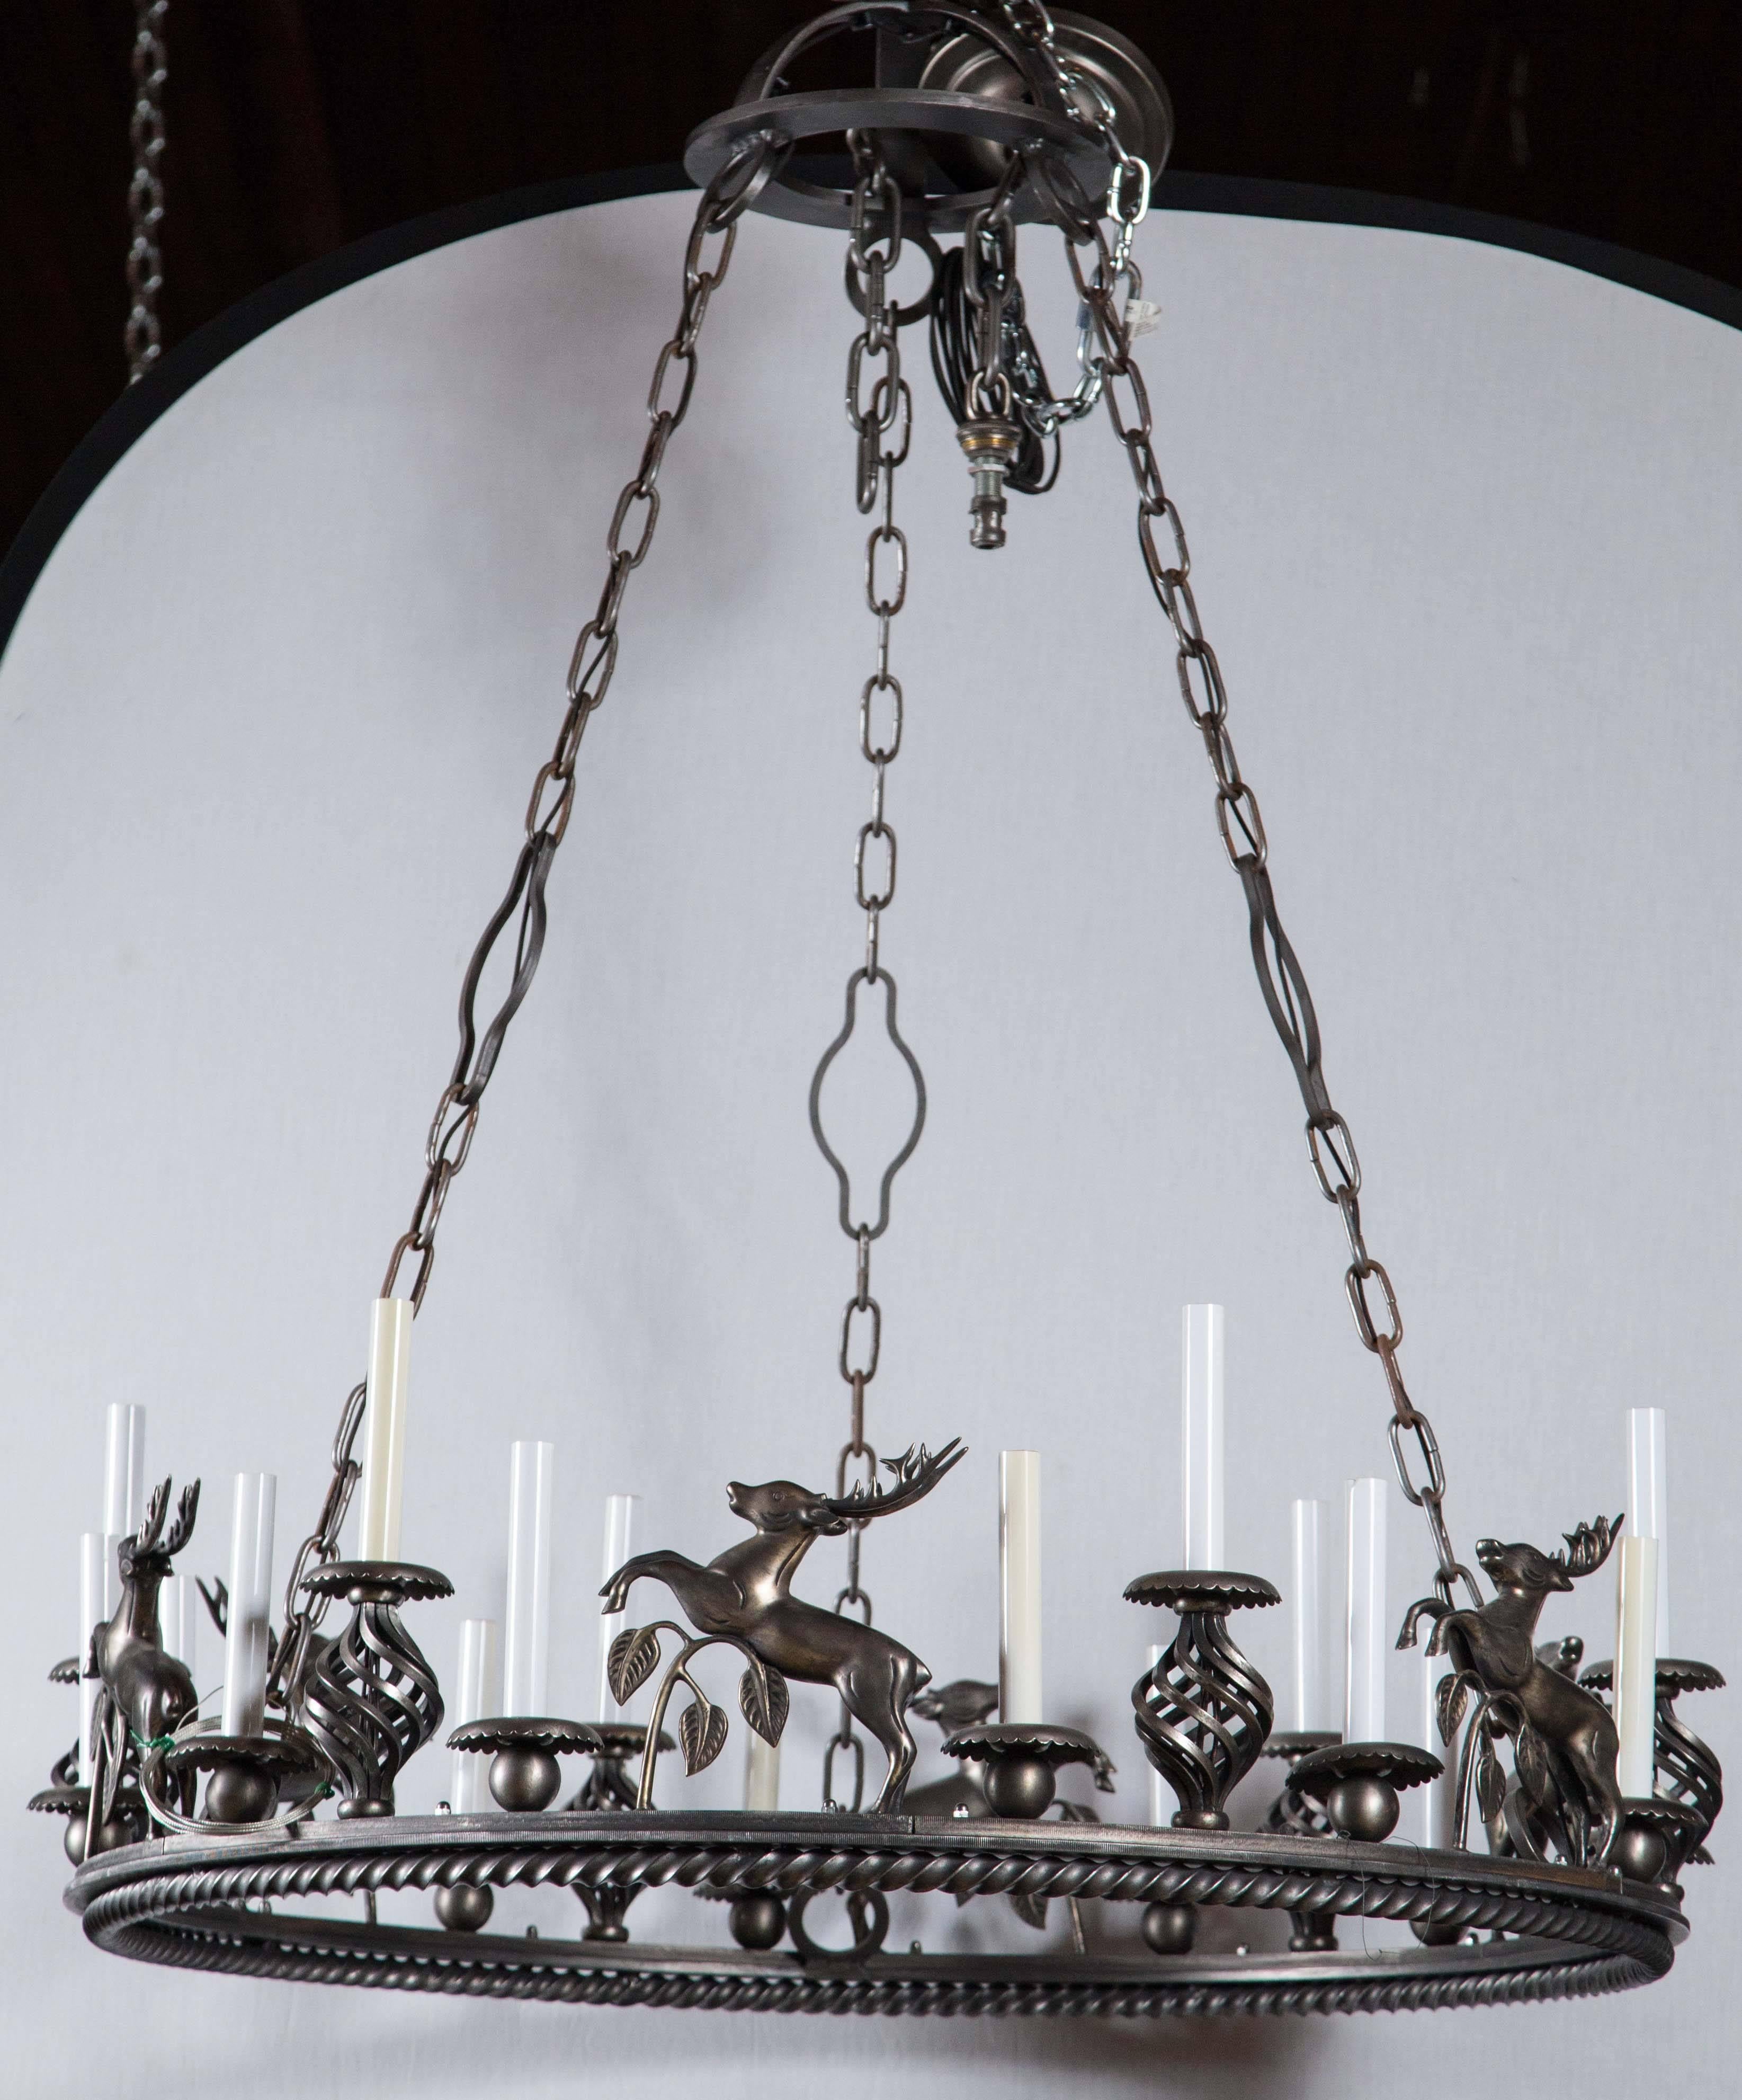 custom made chandeliers